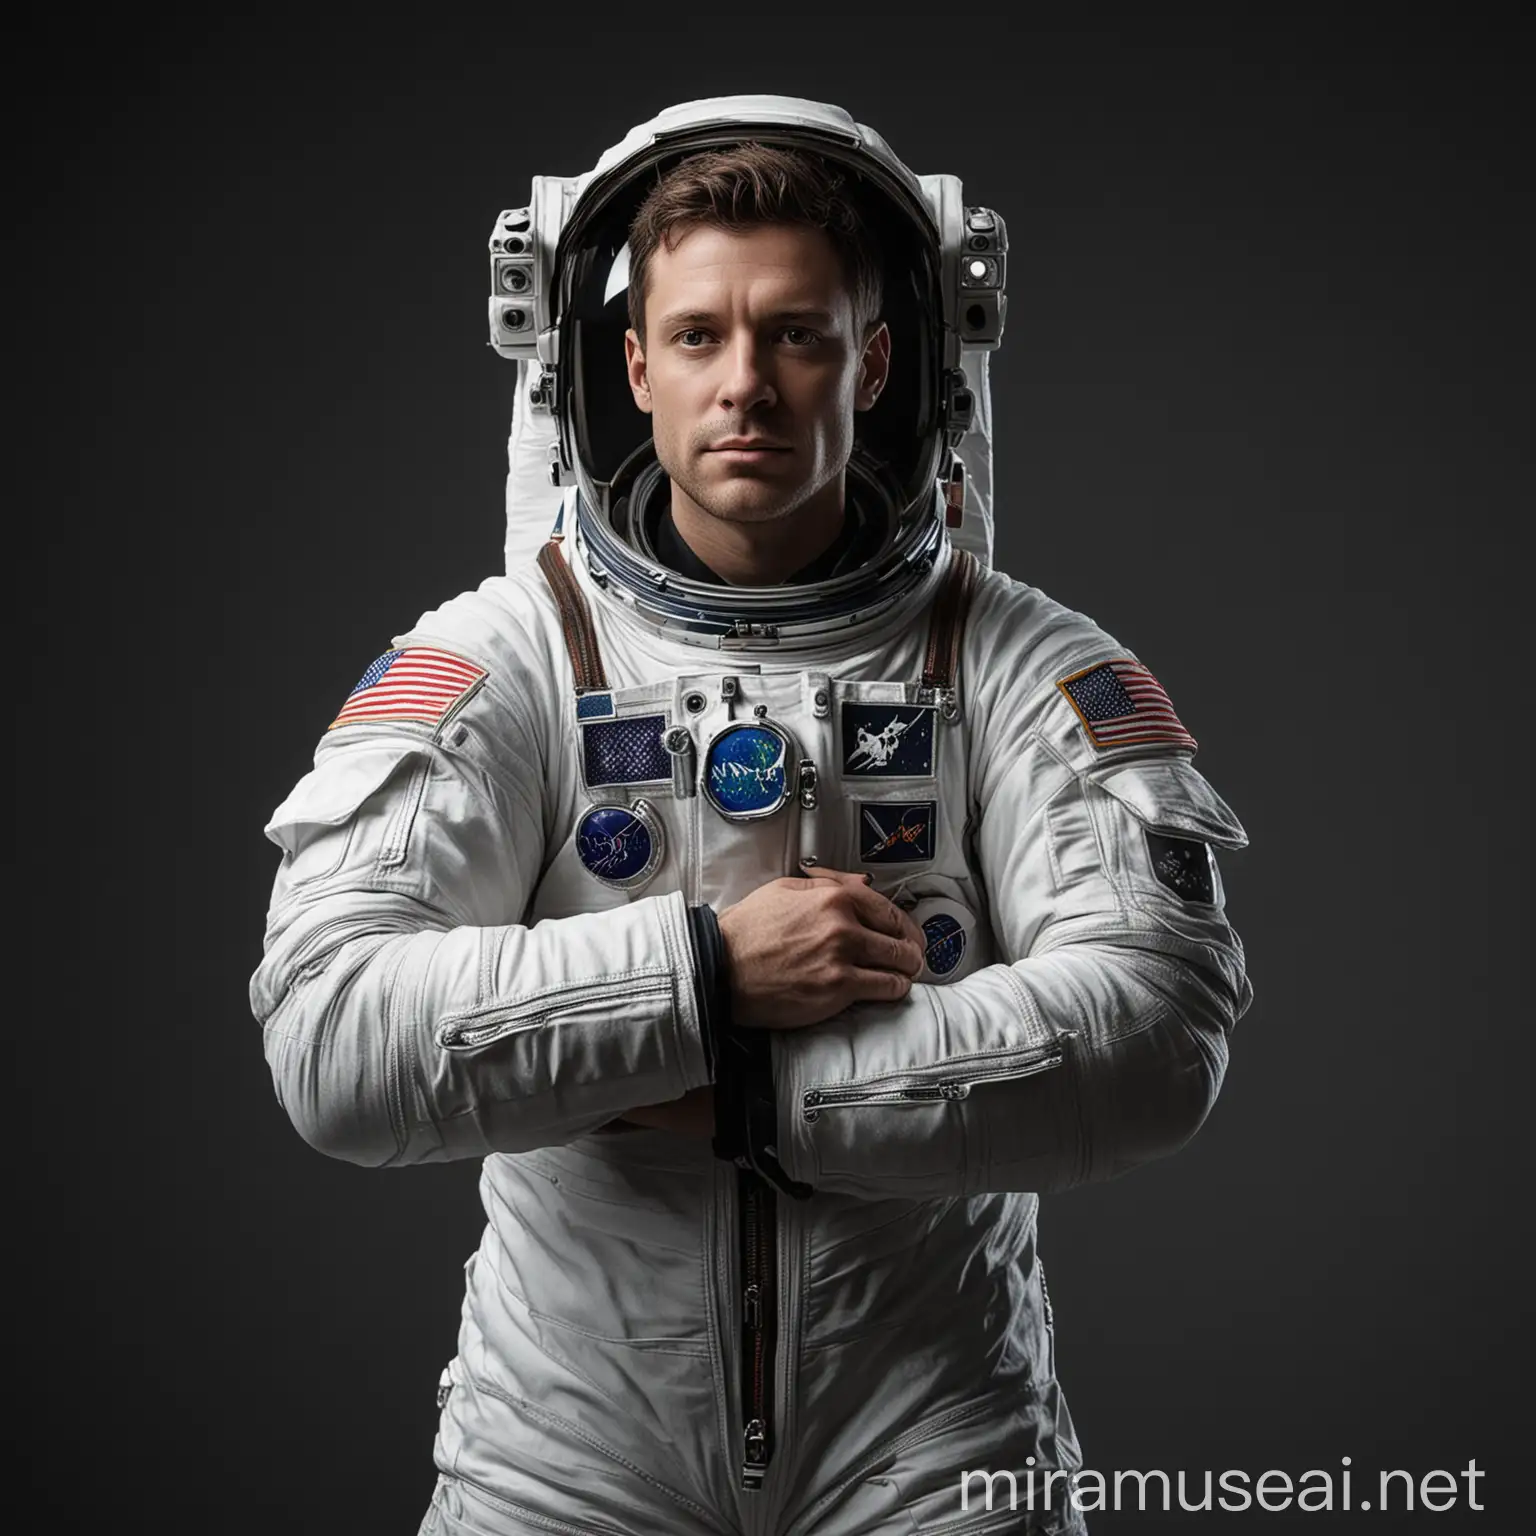 Majestic Astronaut in Hyper Realistic White Spacesuit Against Black Studio Background